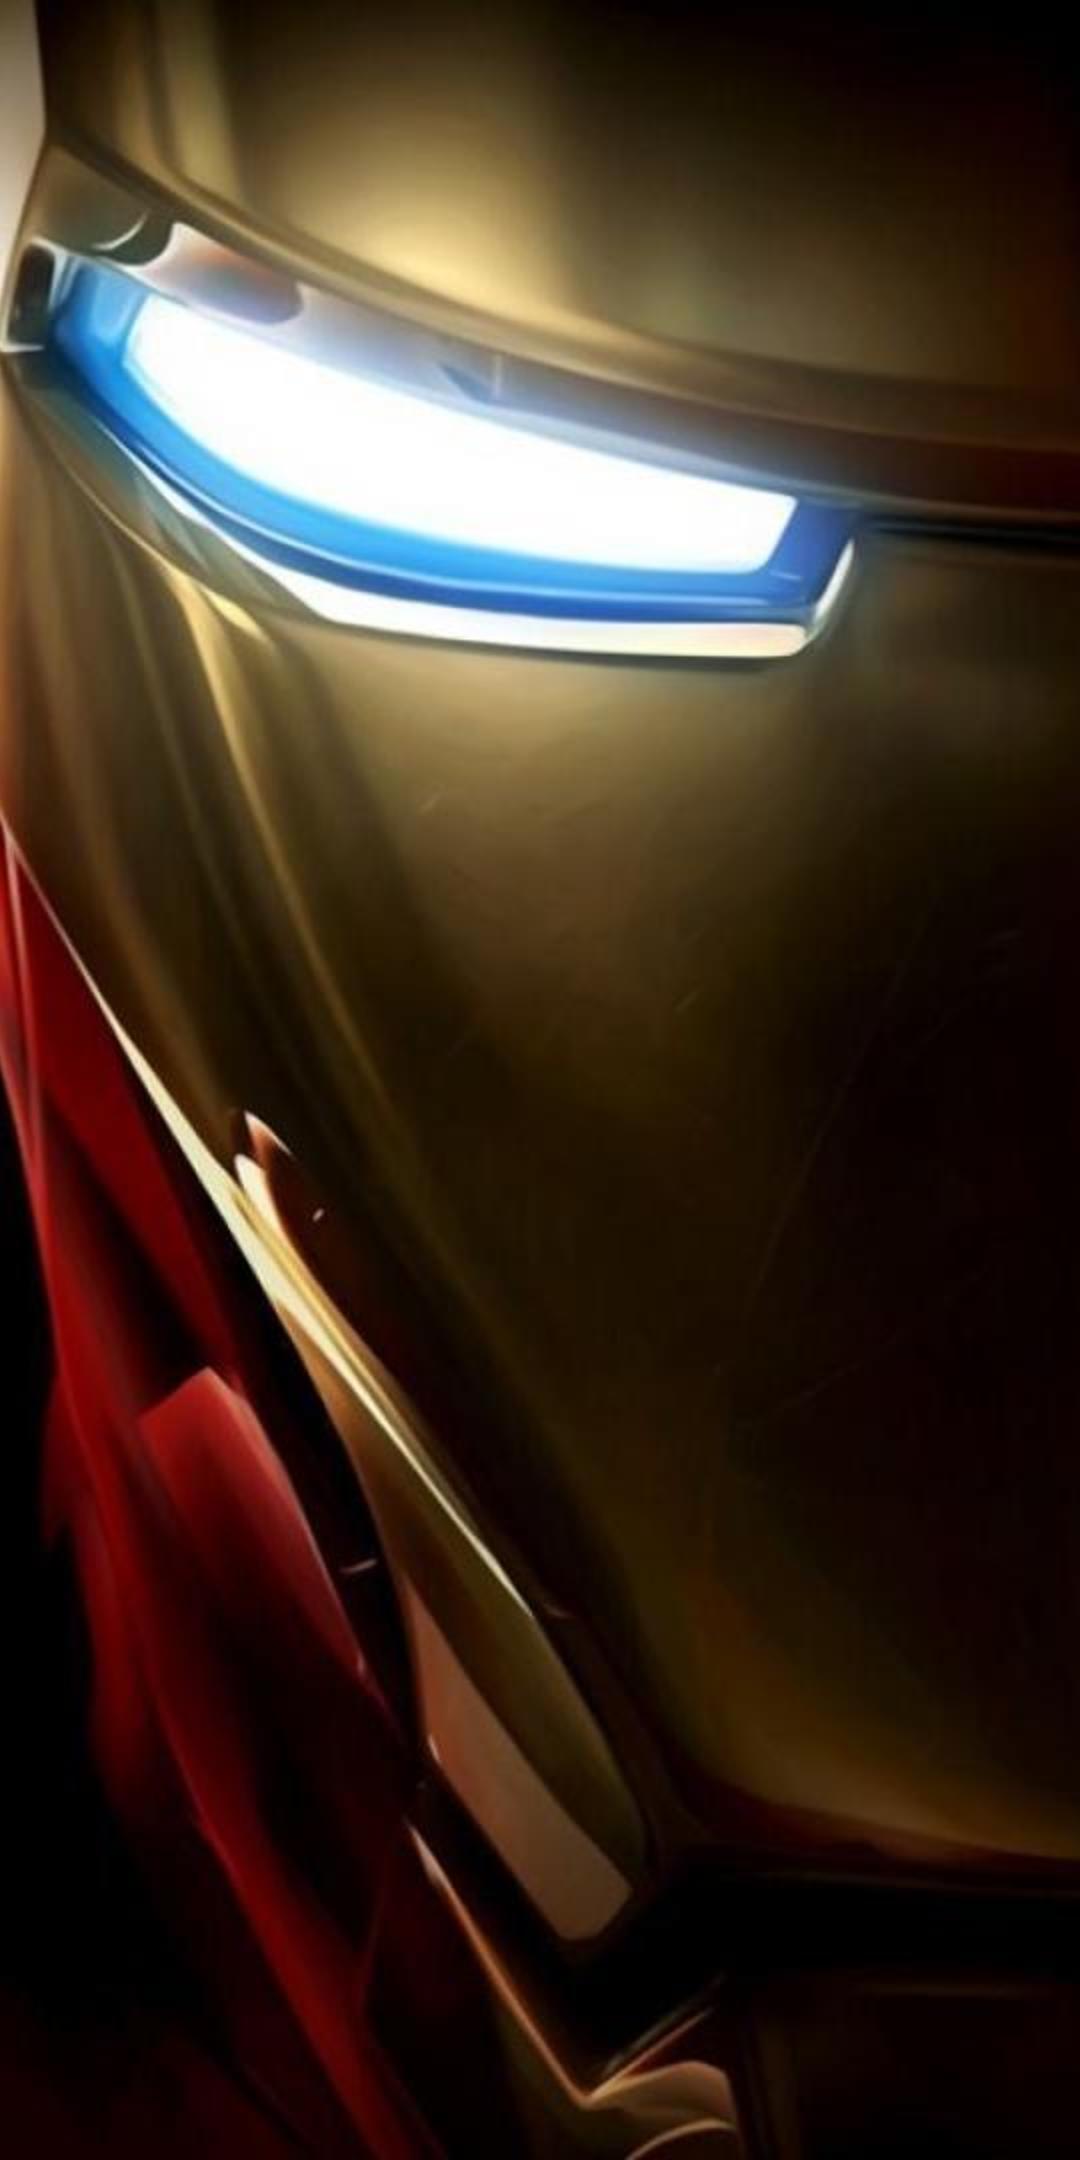 Iron Man Helmet Closeup One Plus 5T, Honor 7x, Honor view 10